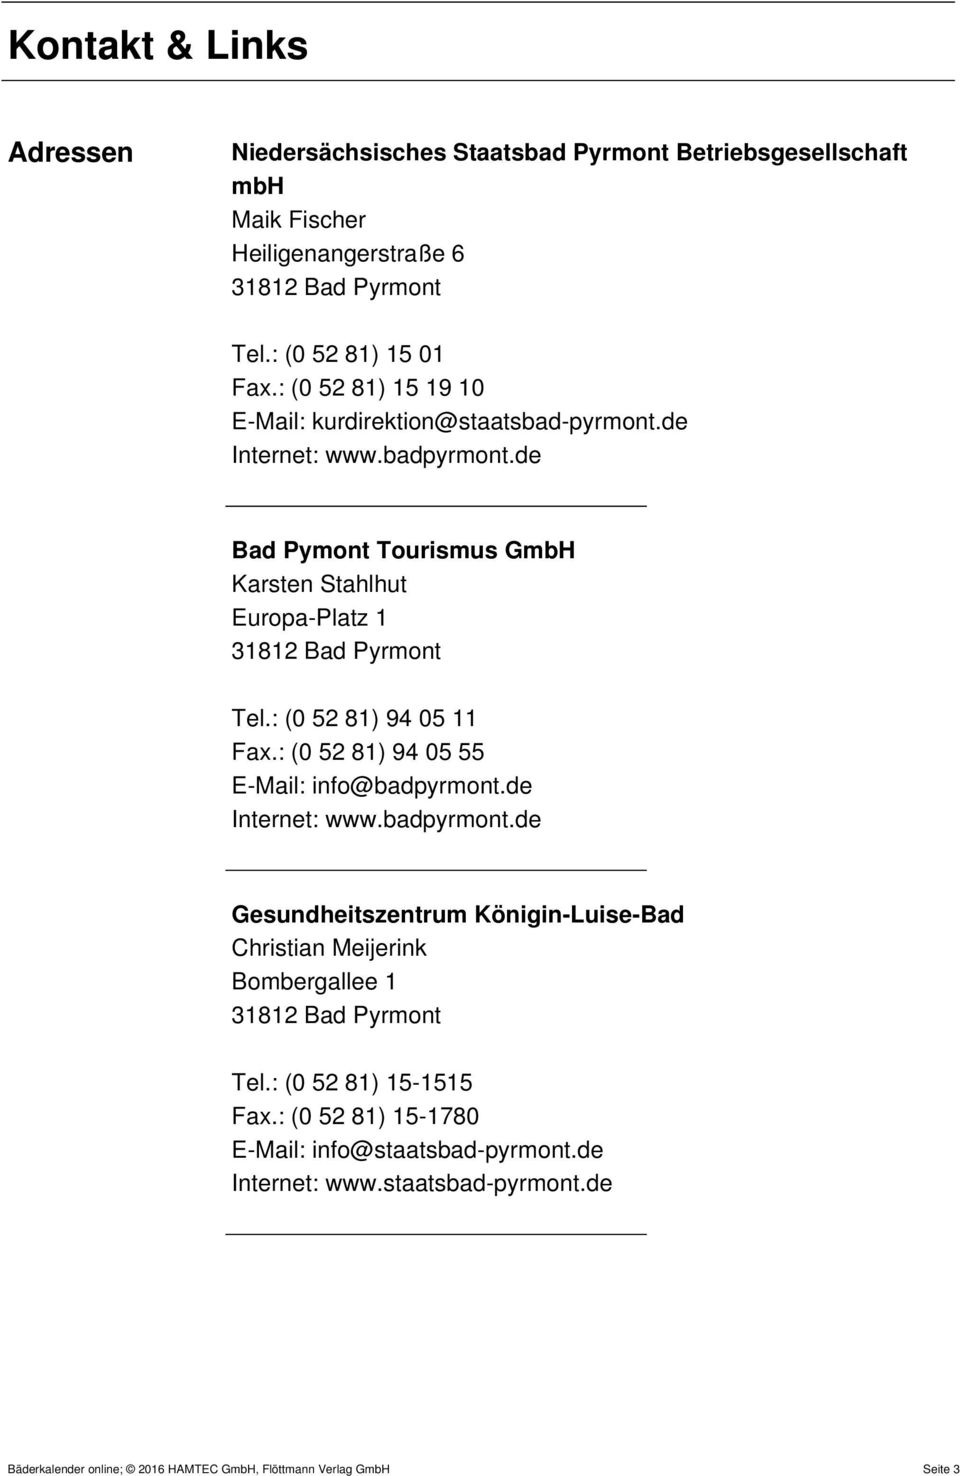 de Bad Pymont Tourismus GmbH Karsten Stahlhut Europa-Platz 1 31812 Bad Pyrmont Tel.: (0 52 81) 94 05 11 Fax.: (0 52 81) 94 05 55 E-Mail: info@badpyrmont.